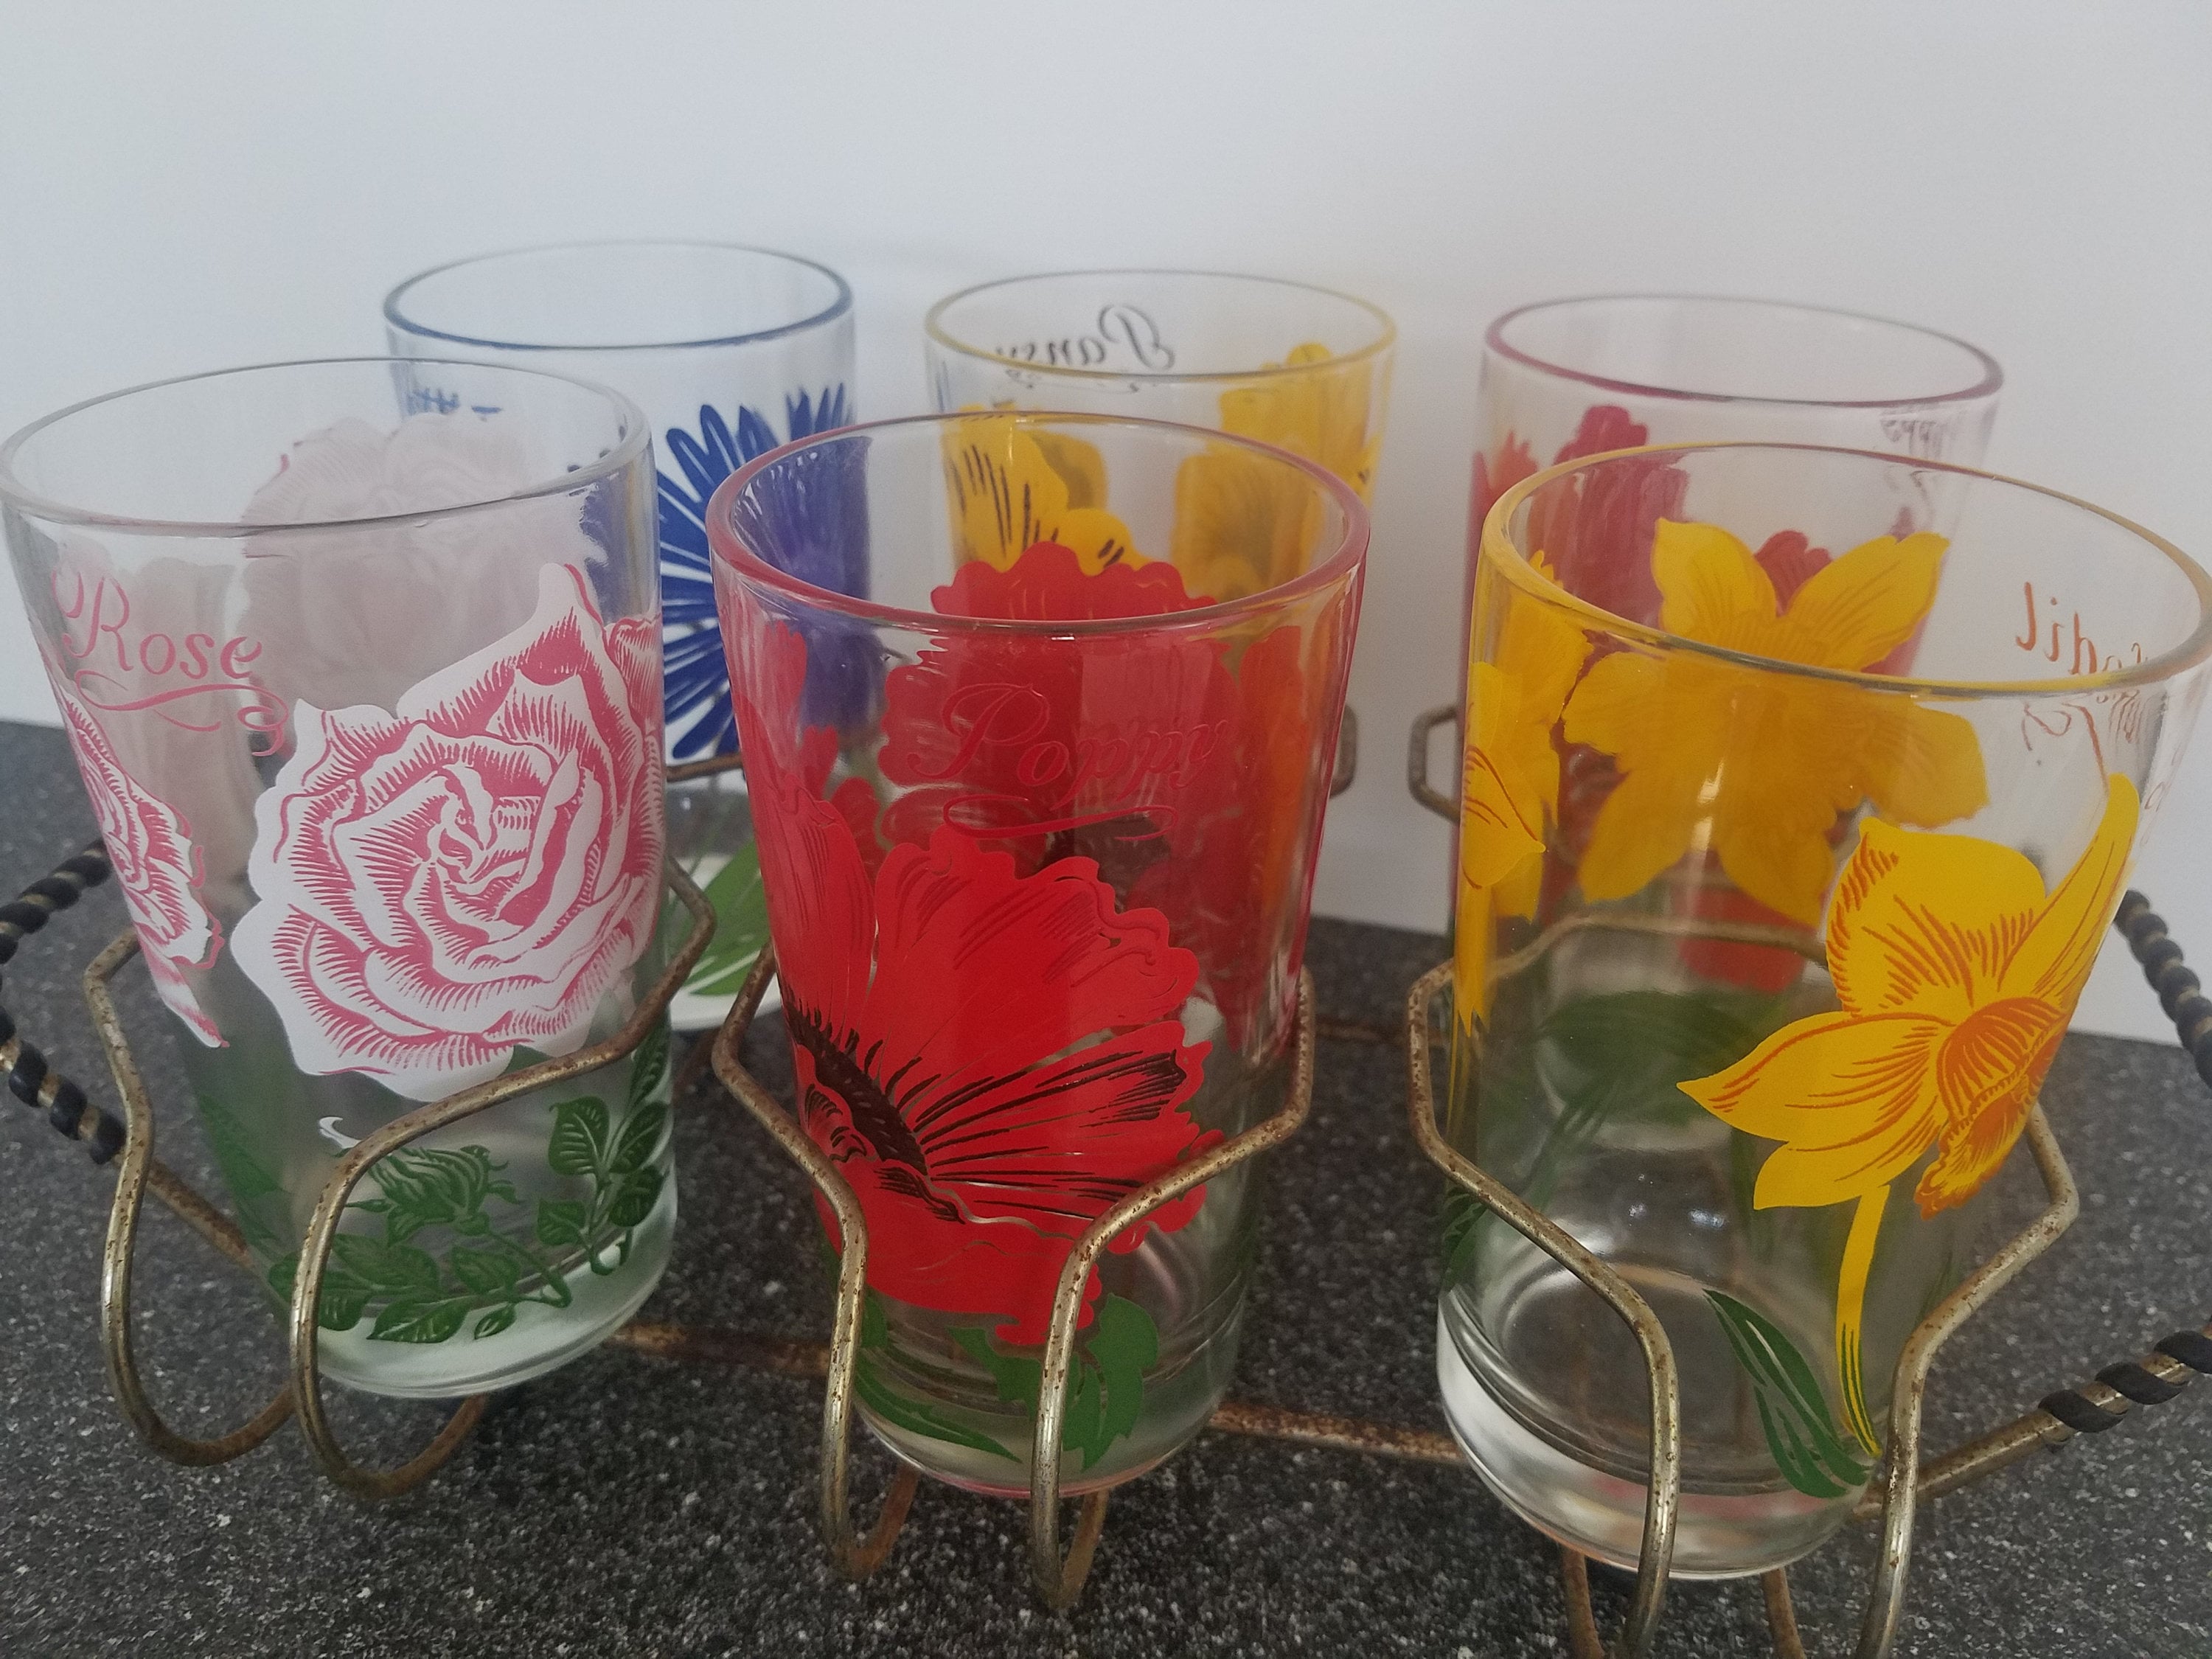 Vintage Botanist Drinking Glass Set, Luxurious Floral Embossed